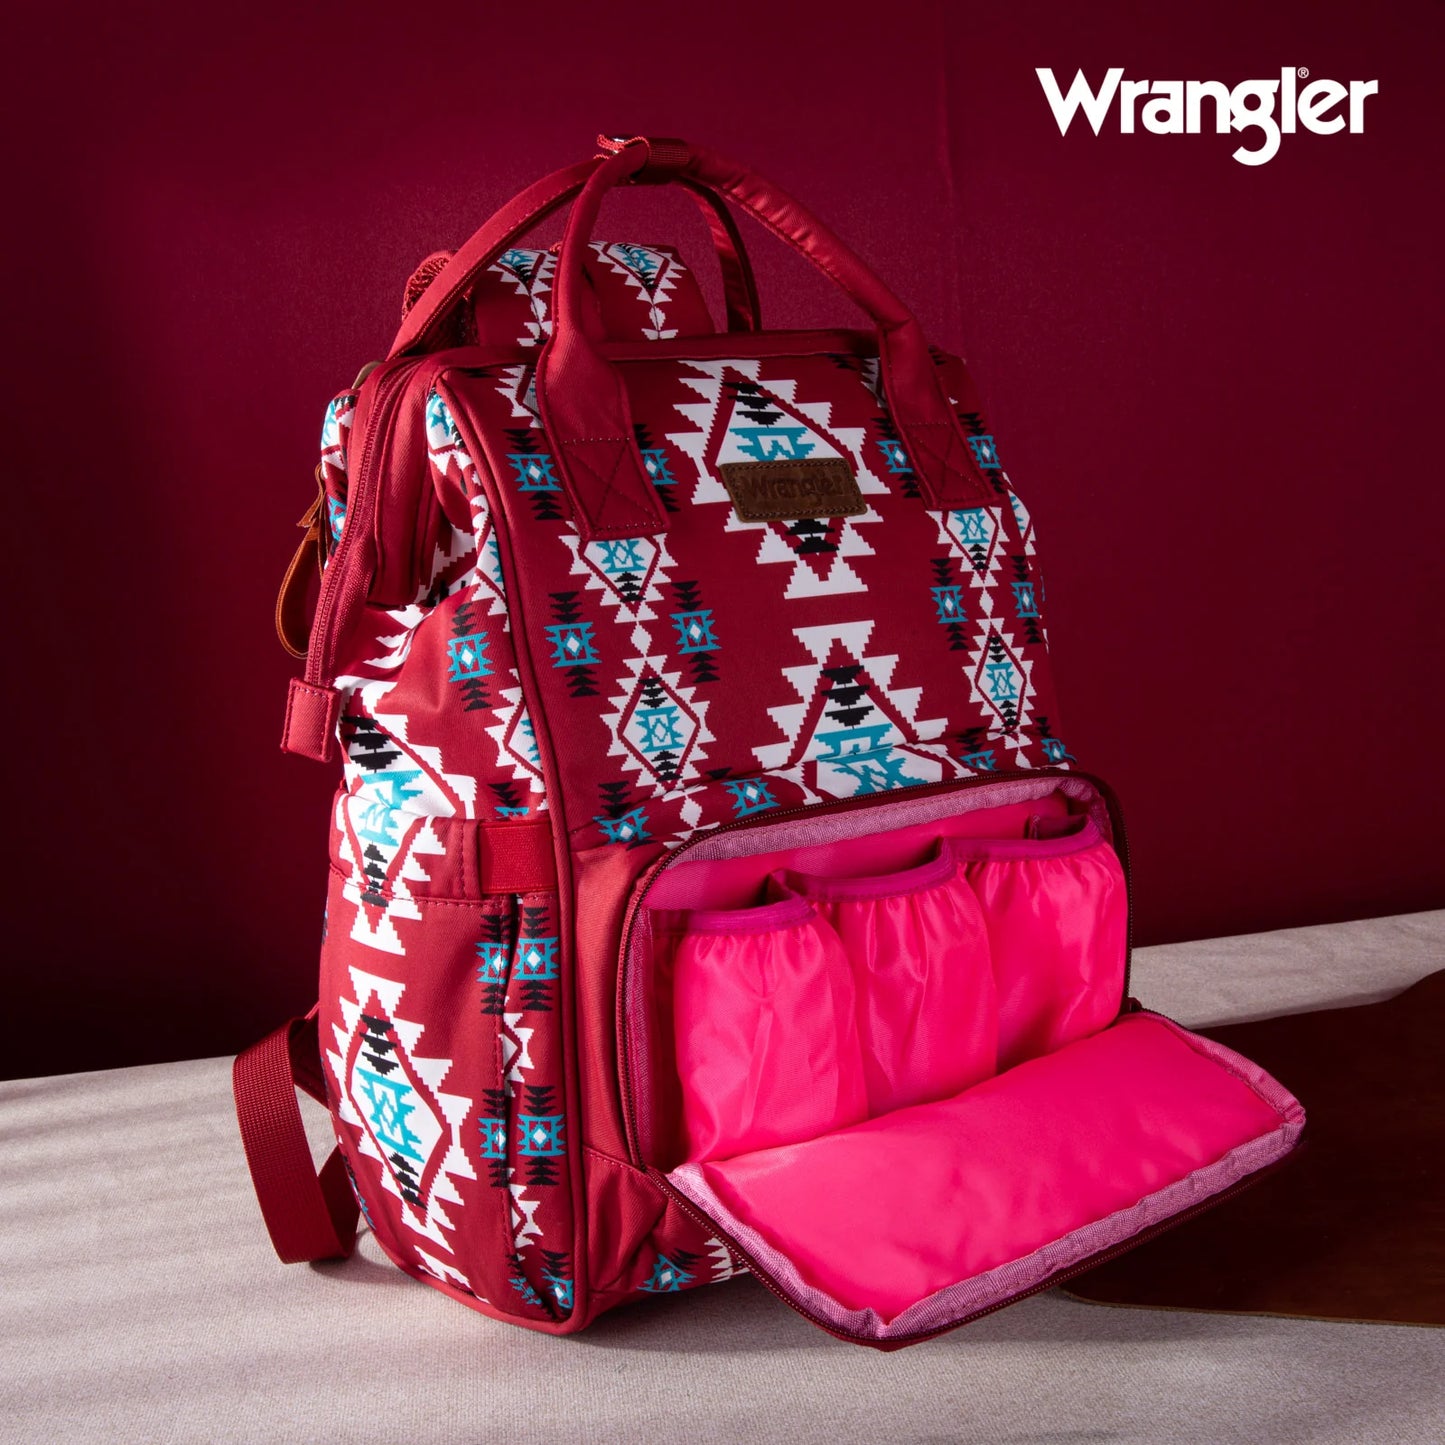 Wrangler Aztec Printed Callie Backpack *Burgundy